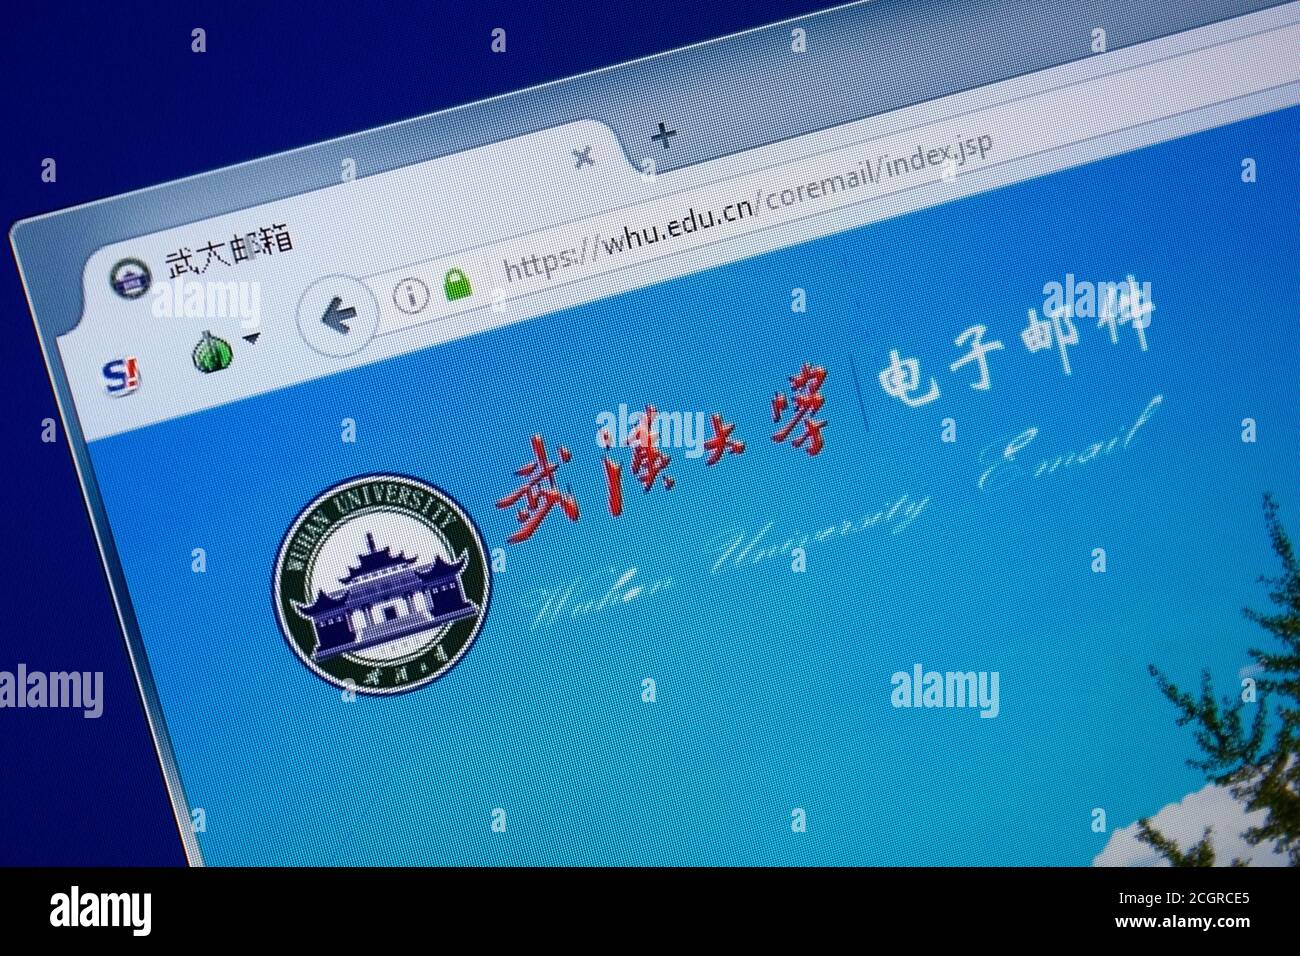 Ryazan, Russia - September 09, 2018: Homepage of Whu website on the display of PC, url - Whu.edu.cn. Stock Photo